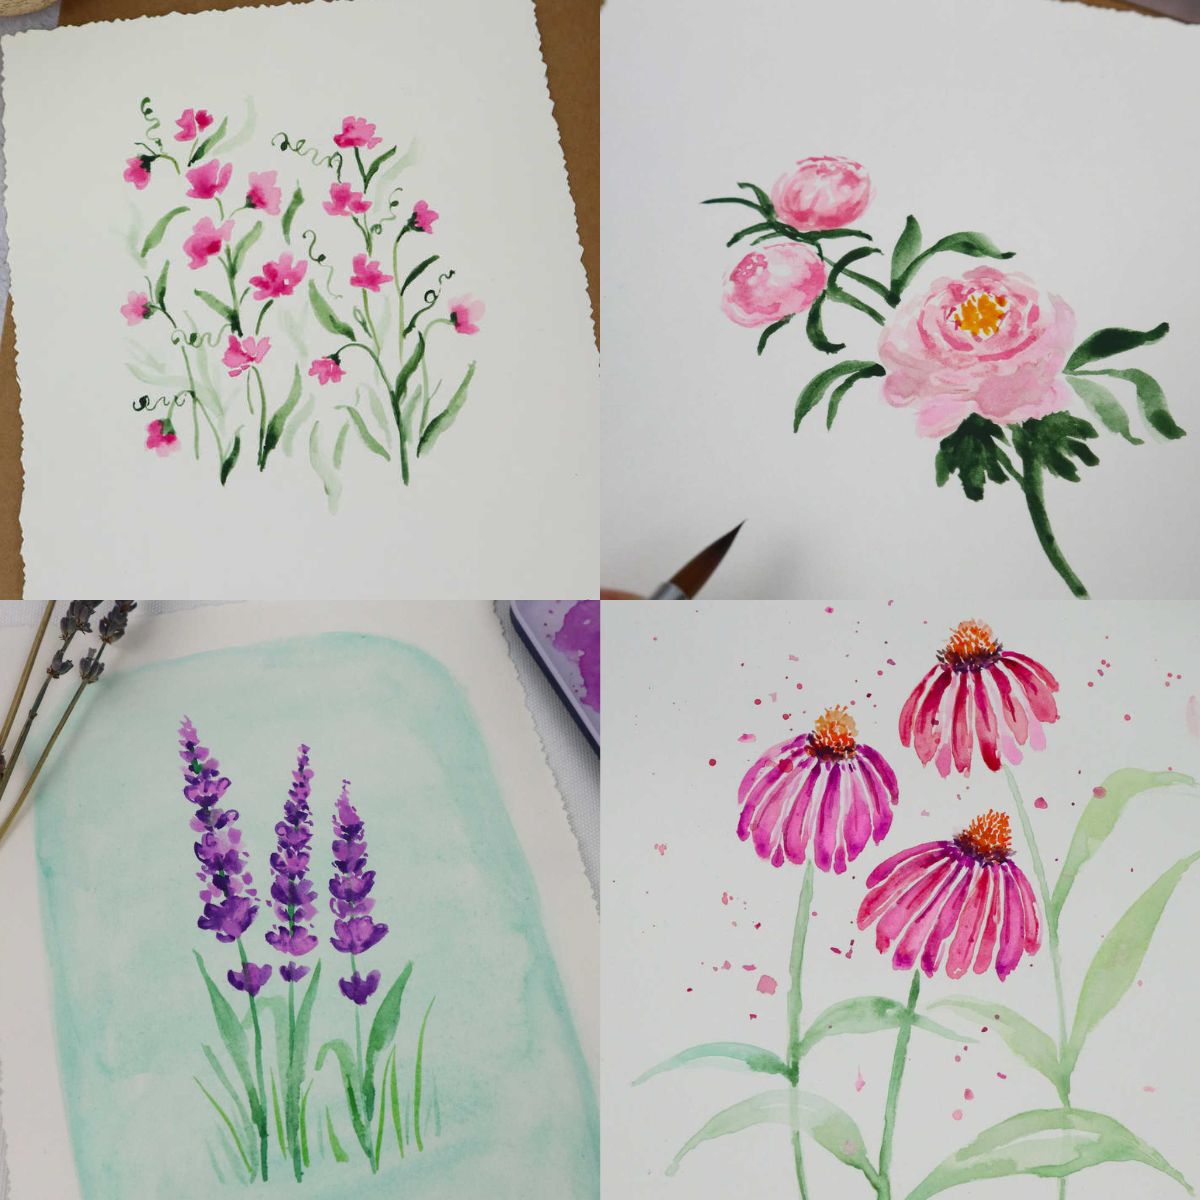 75 Watercolor Flower Painting Ideas for Beginners - Beautiful Dawn Designs   Watercolor flower art, Watercolor paintings tutorials, Diy watercolor  painting